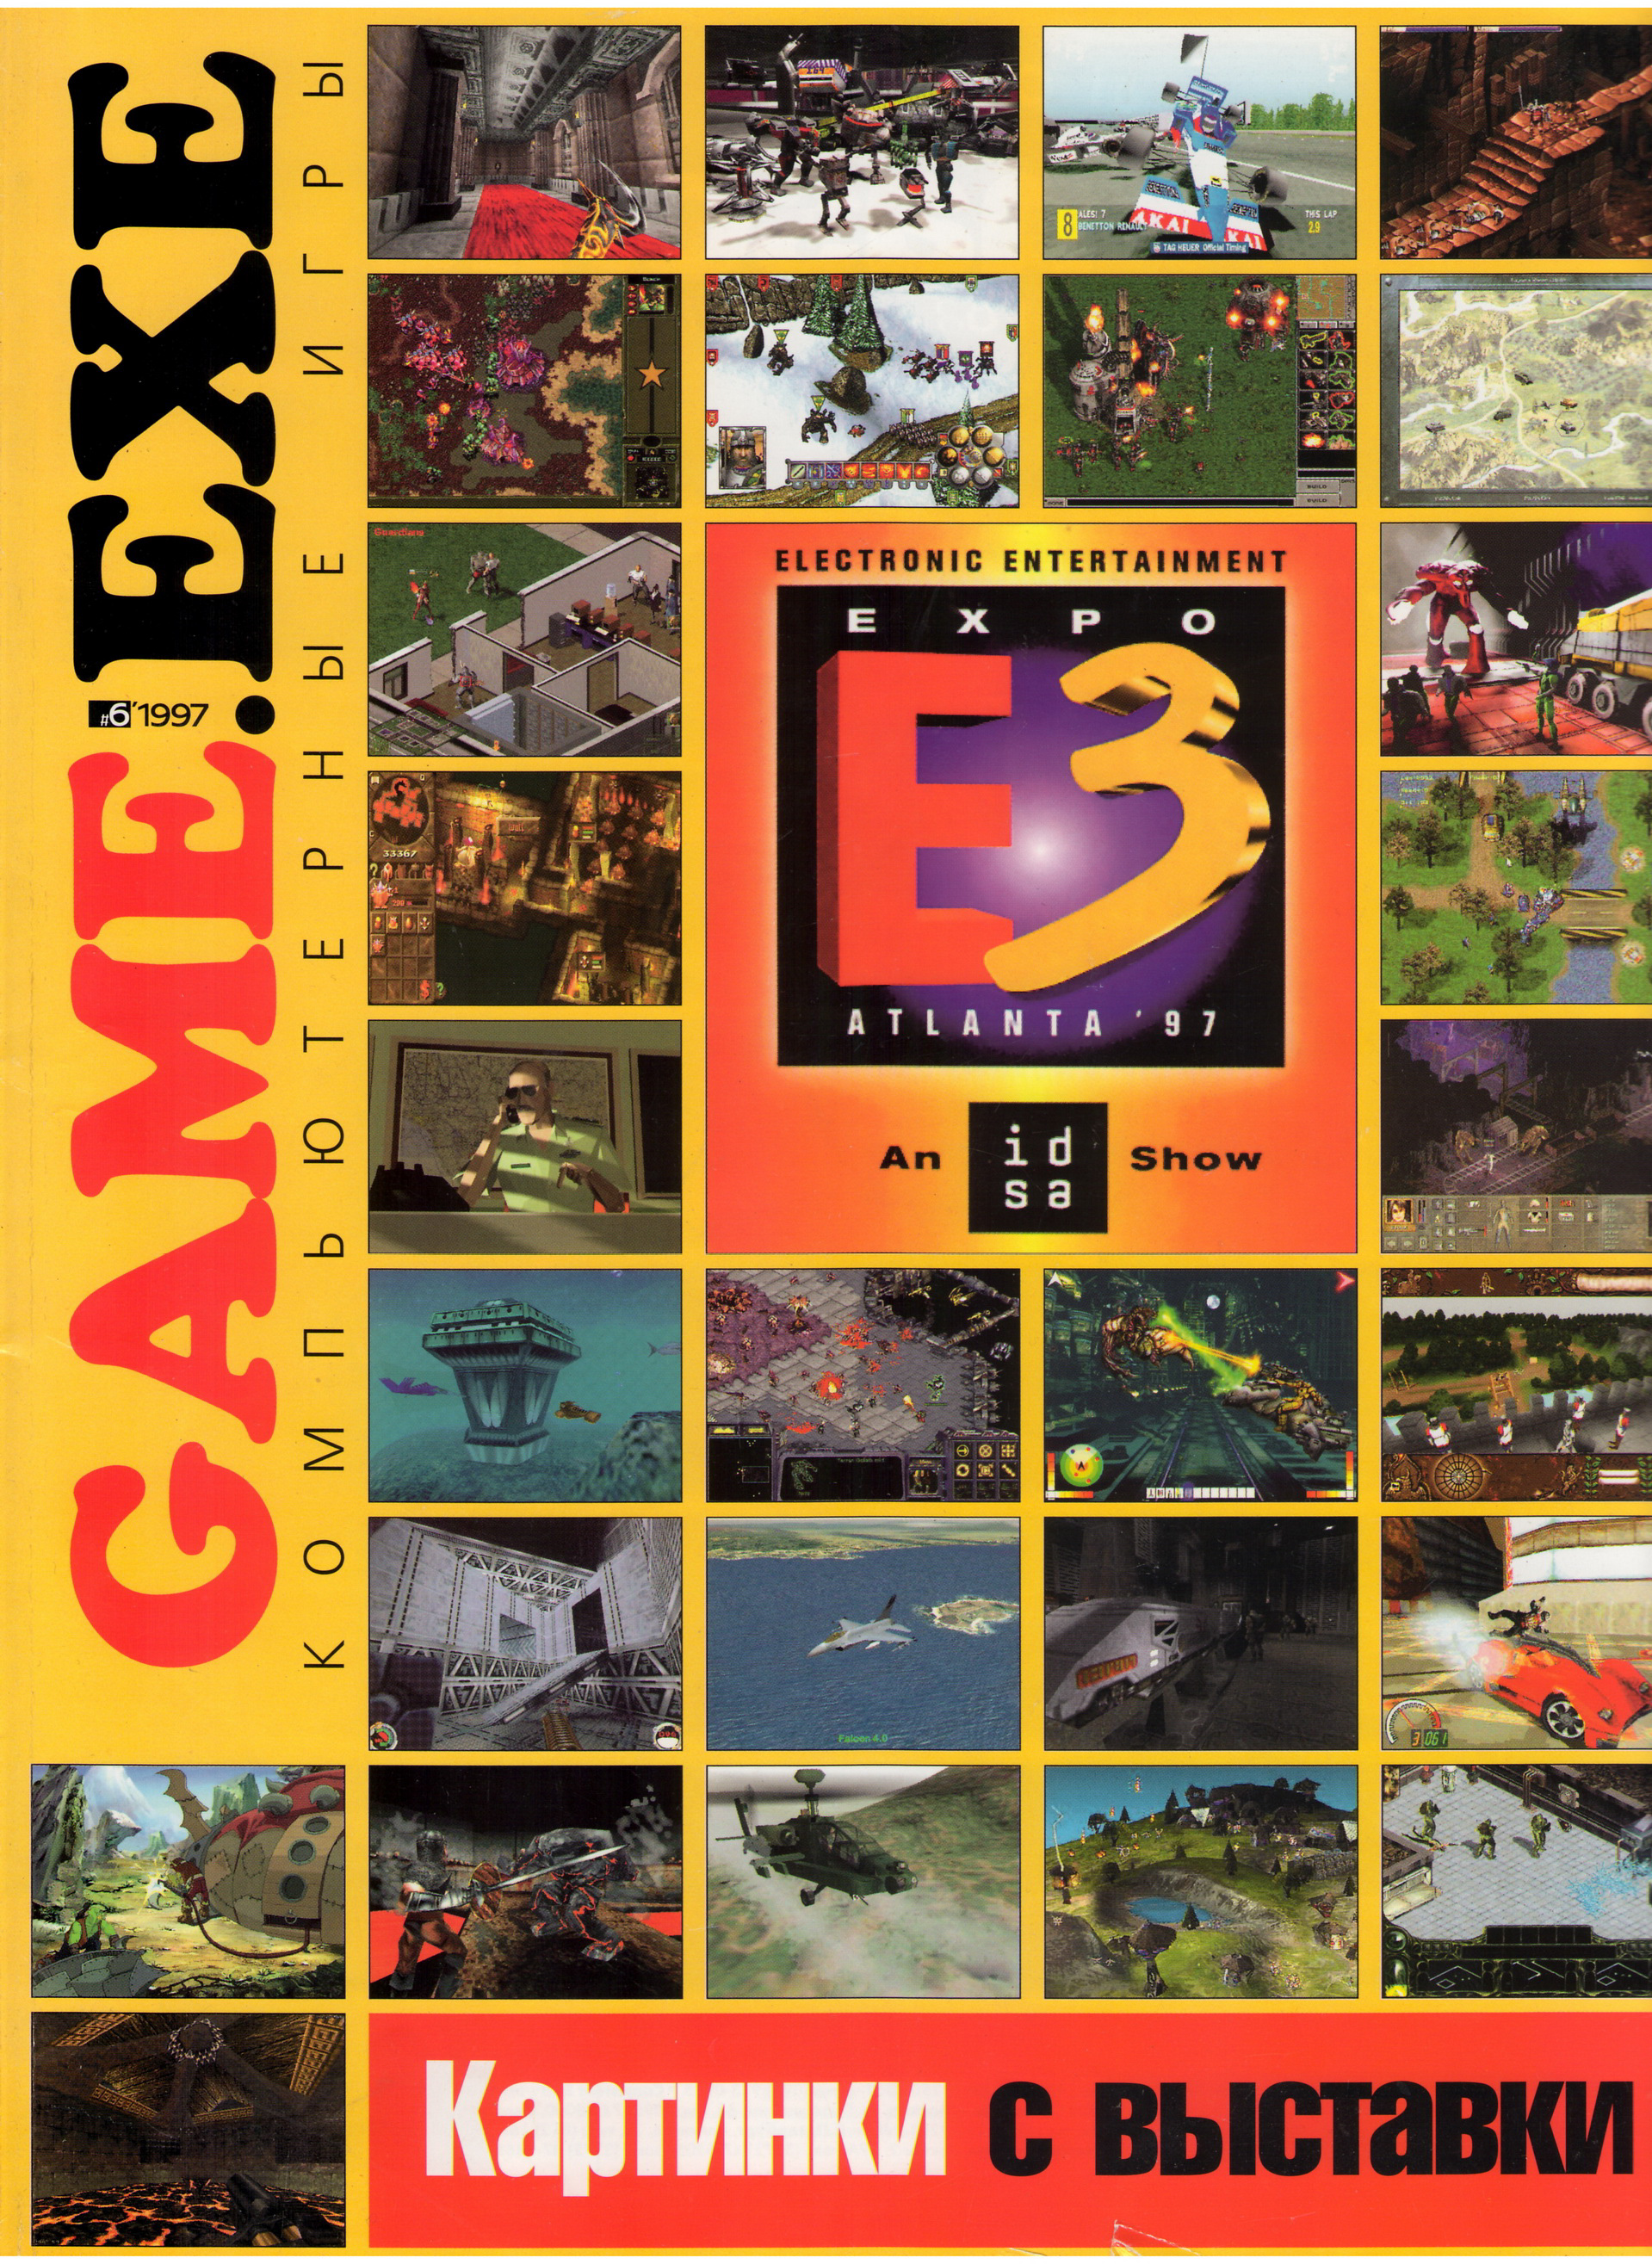 Download game exe. Game exe журнал. Game.exe 1997. Журнал game exe 1997. Game exe журнал 2002.